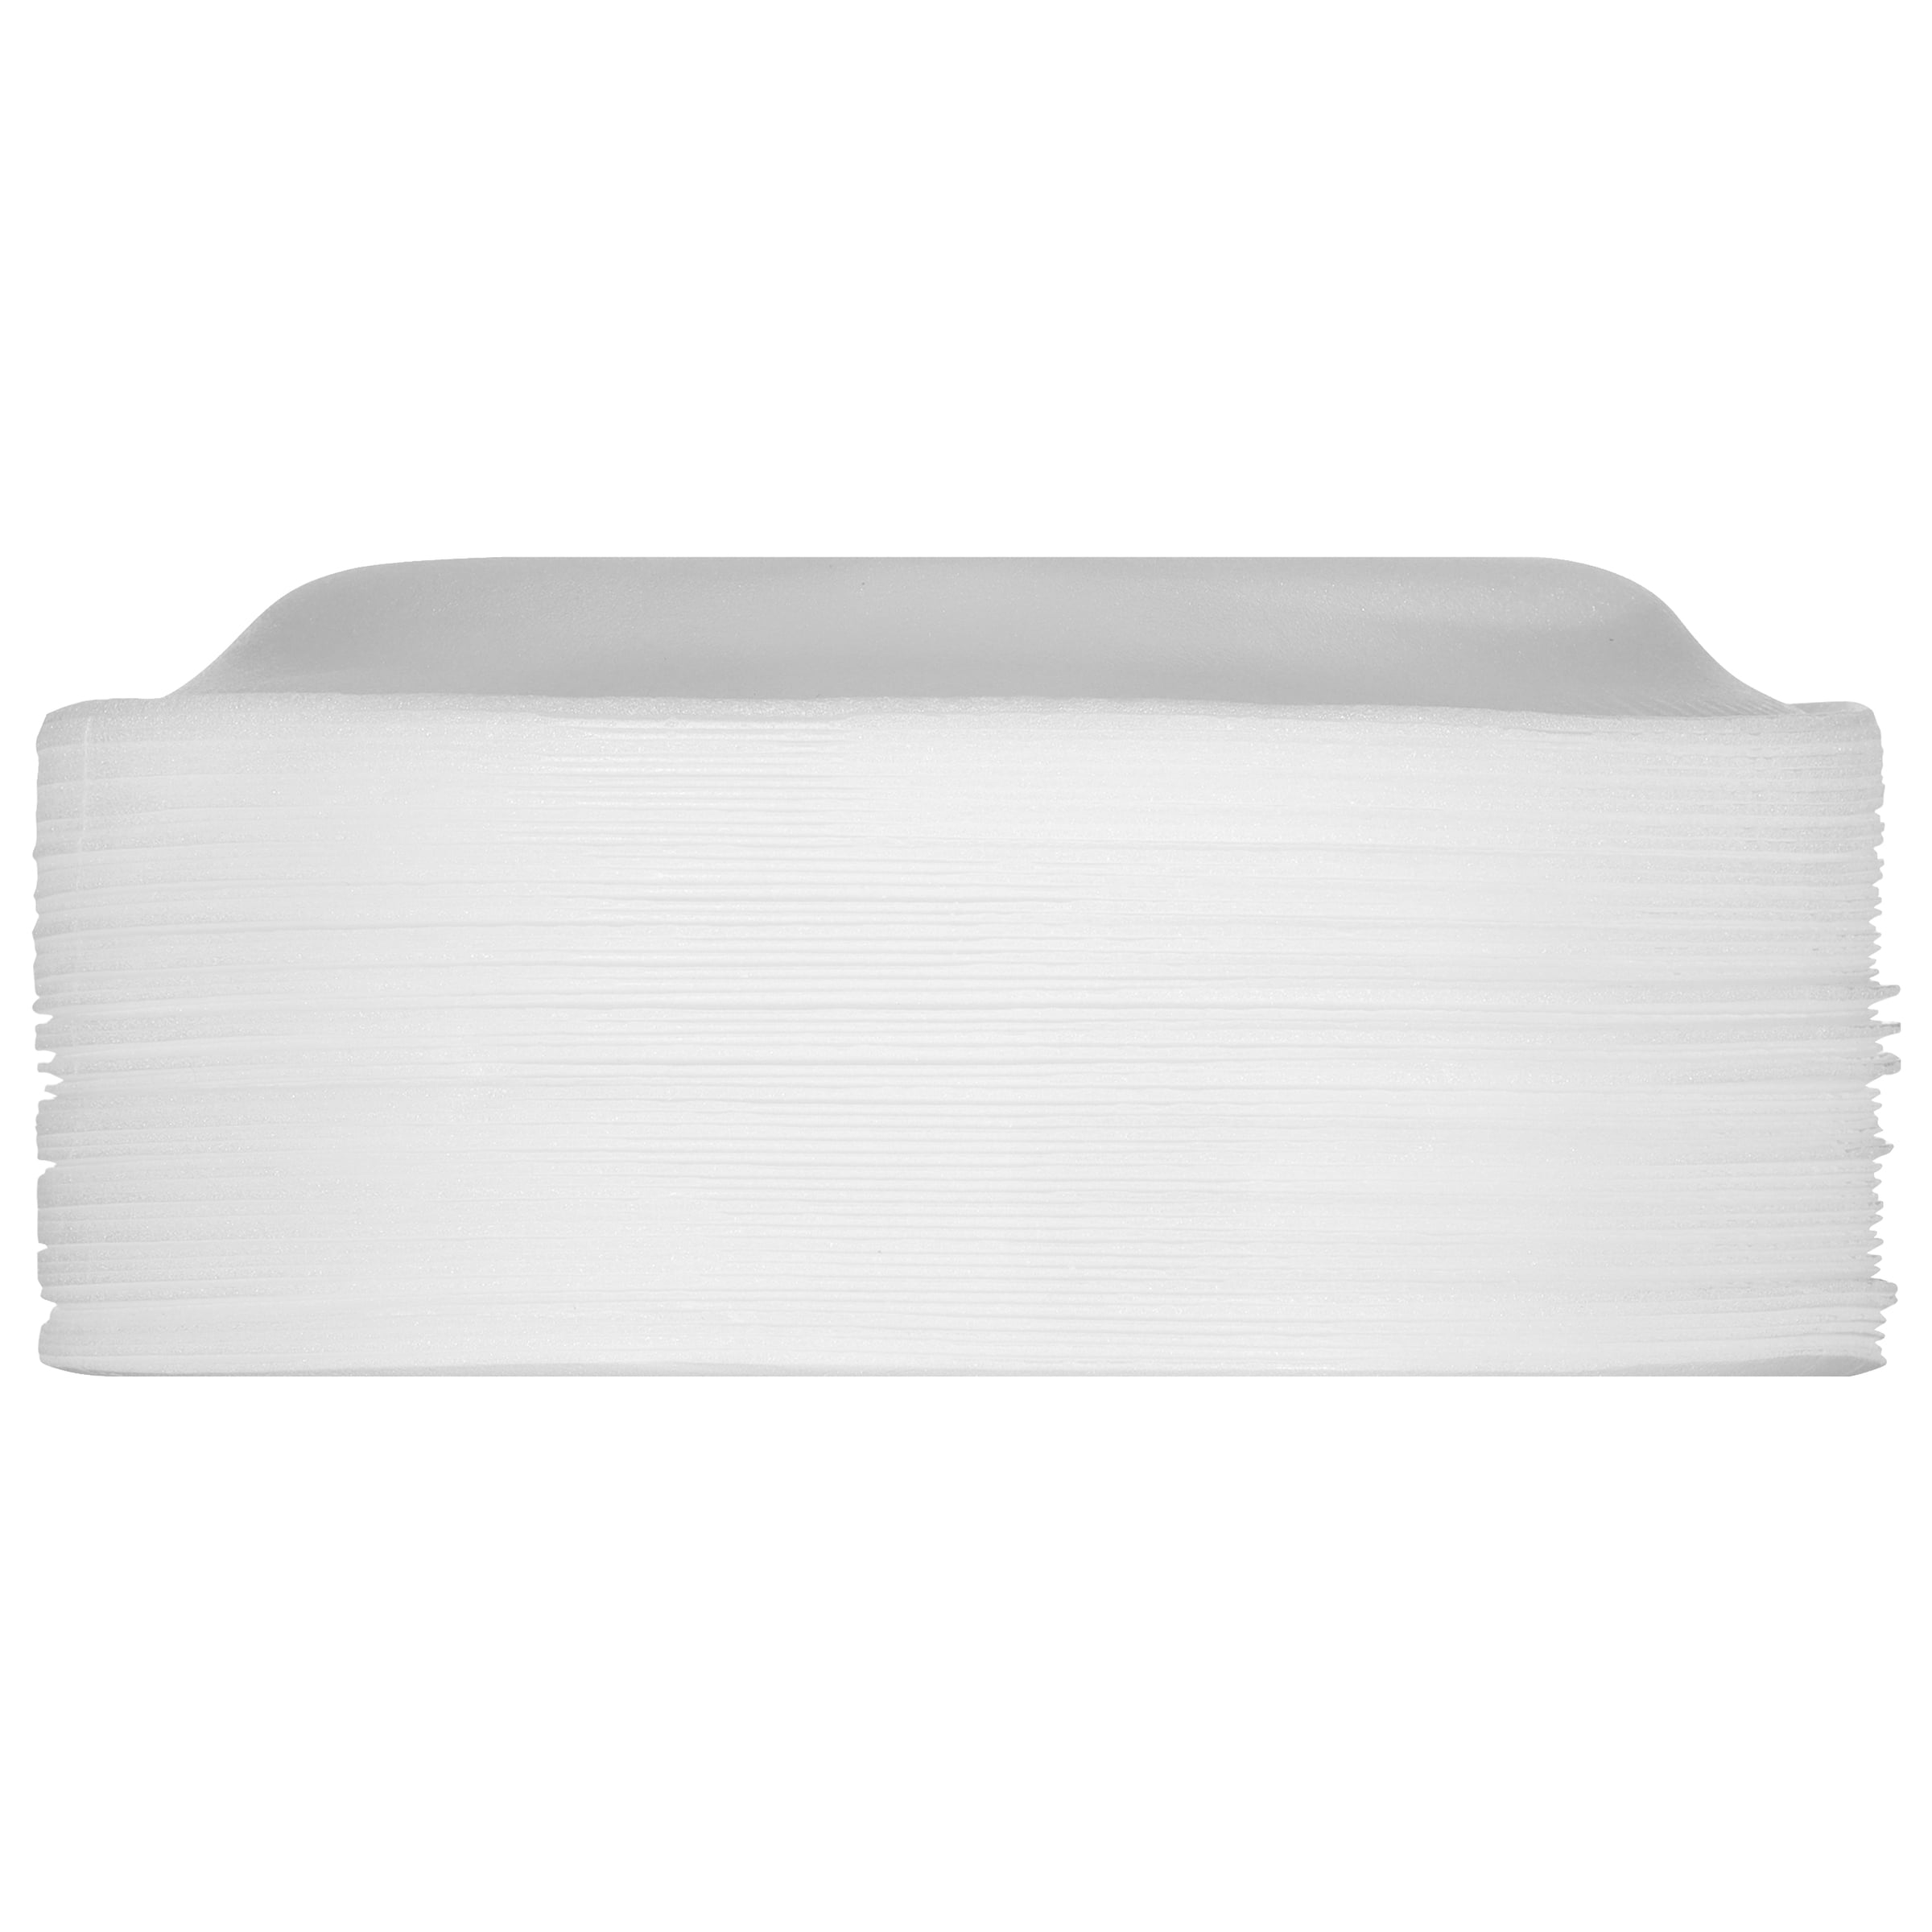 TOTALPACK® 9 Foam Plates 500 Units